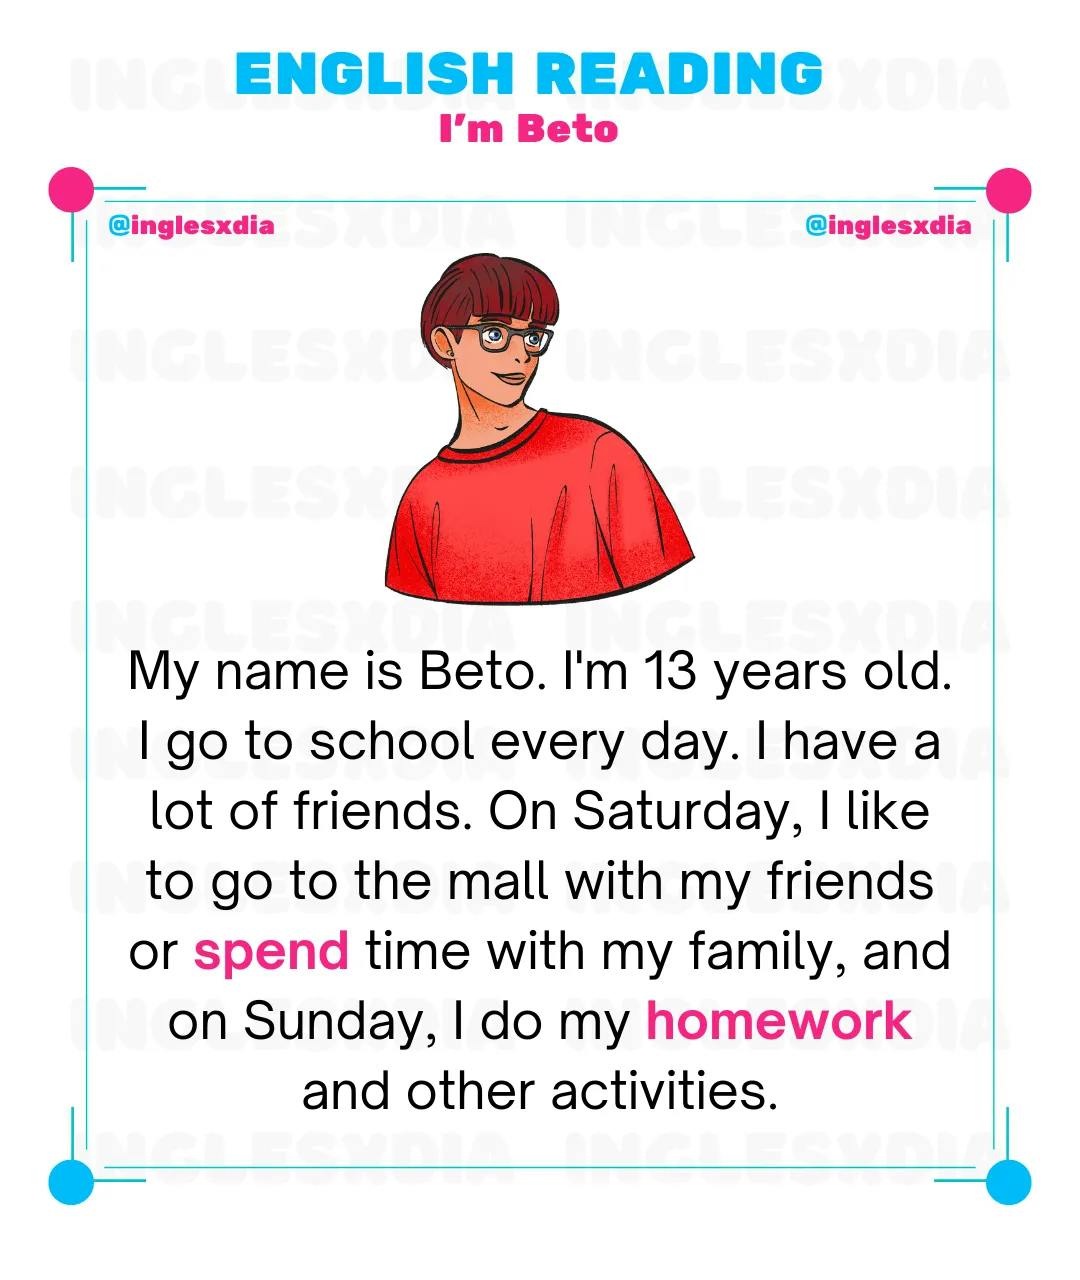 I'm Beto